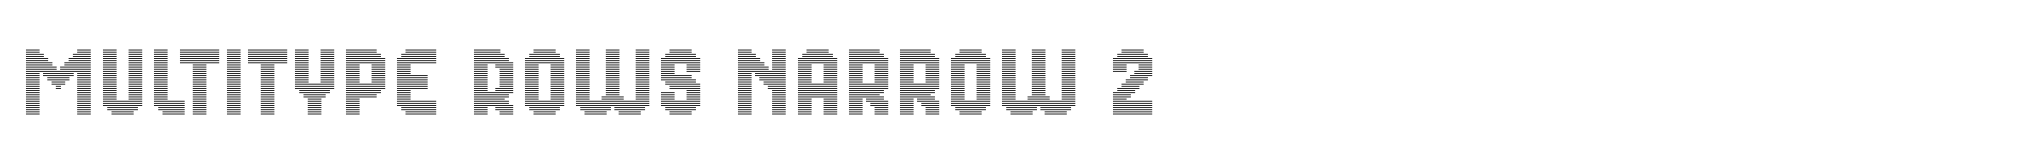 MultiType Rows Narrow 2 image